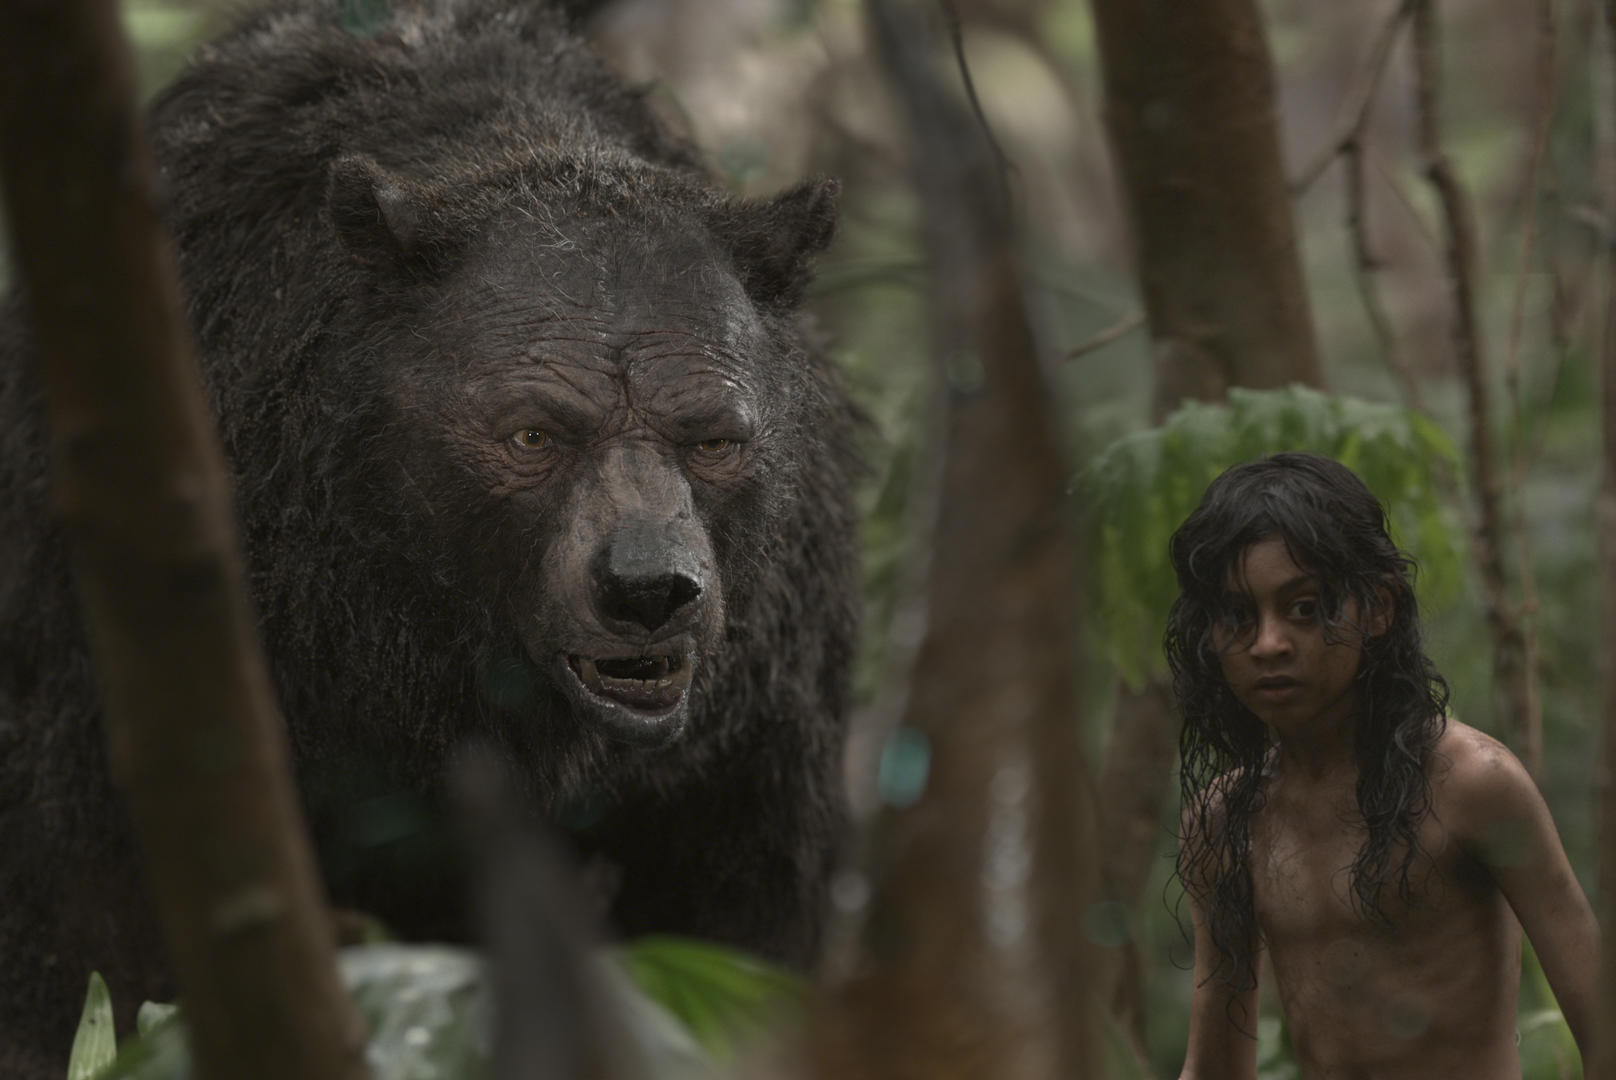 Mowgli: Relatos del libro de la selva 